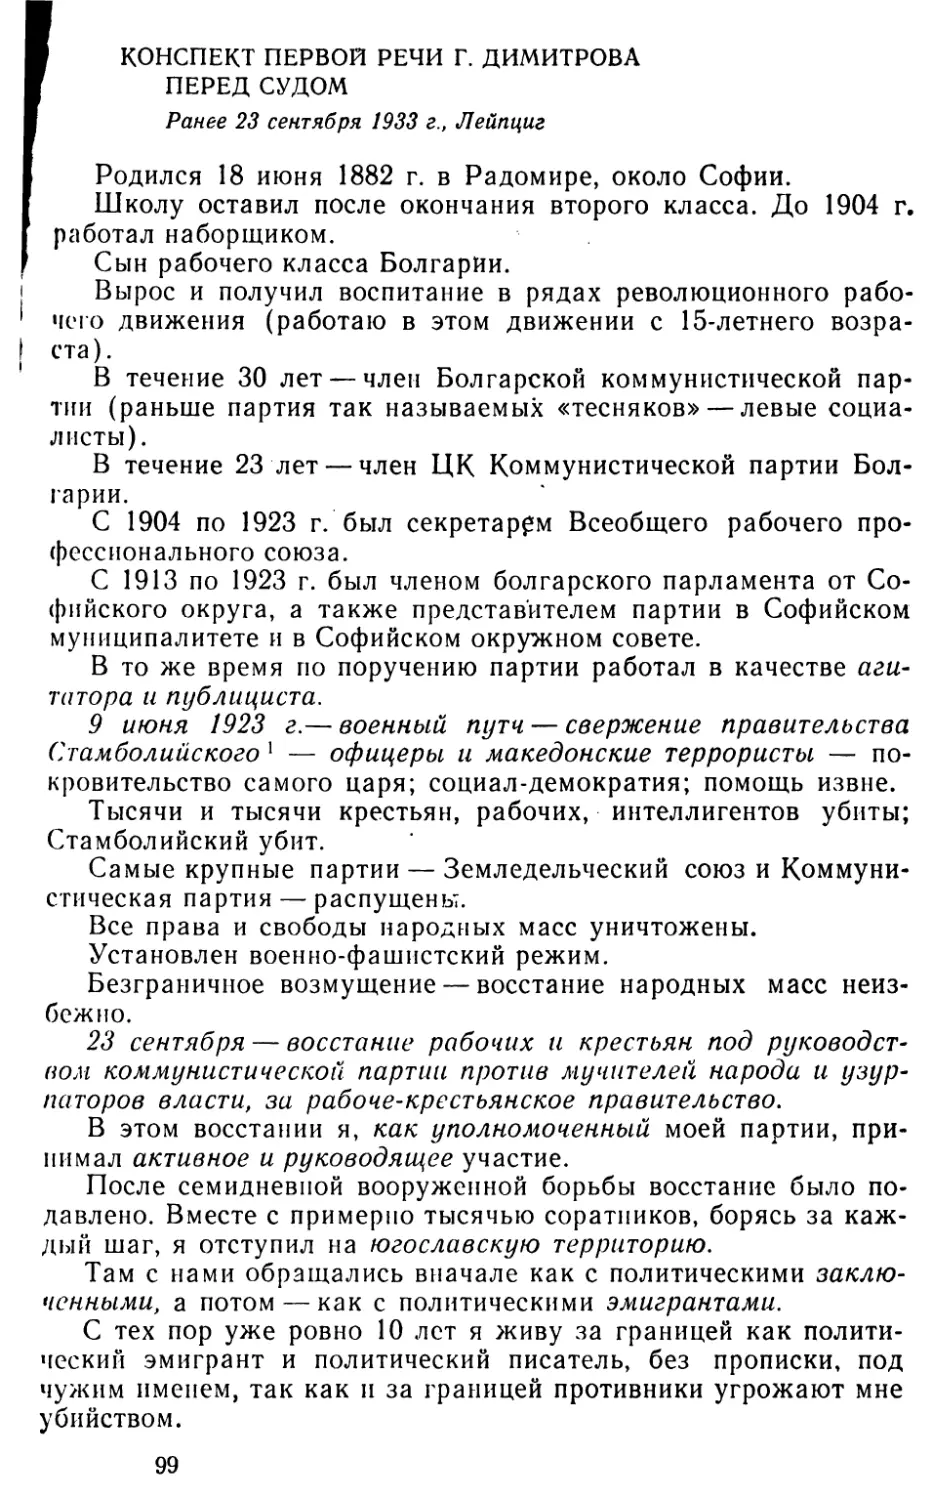 Конспект первой речи Г. Димитрова перед судом. Ранее 23 сентября 1933 г